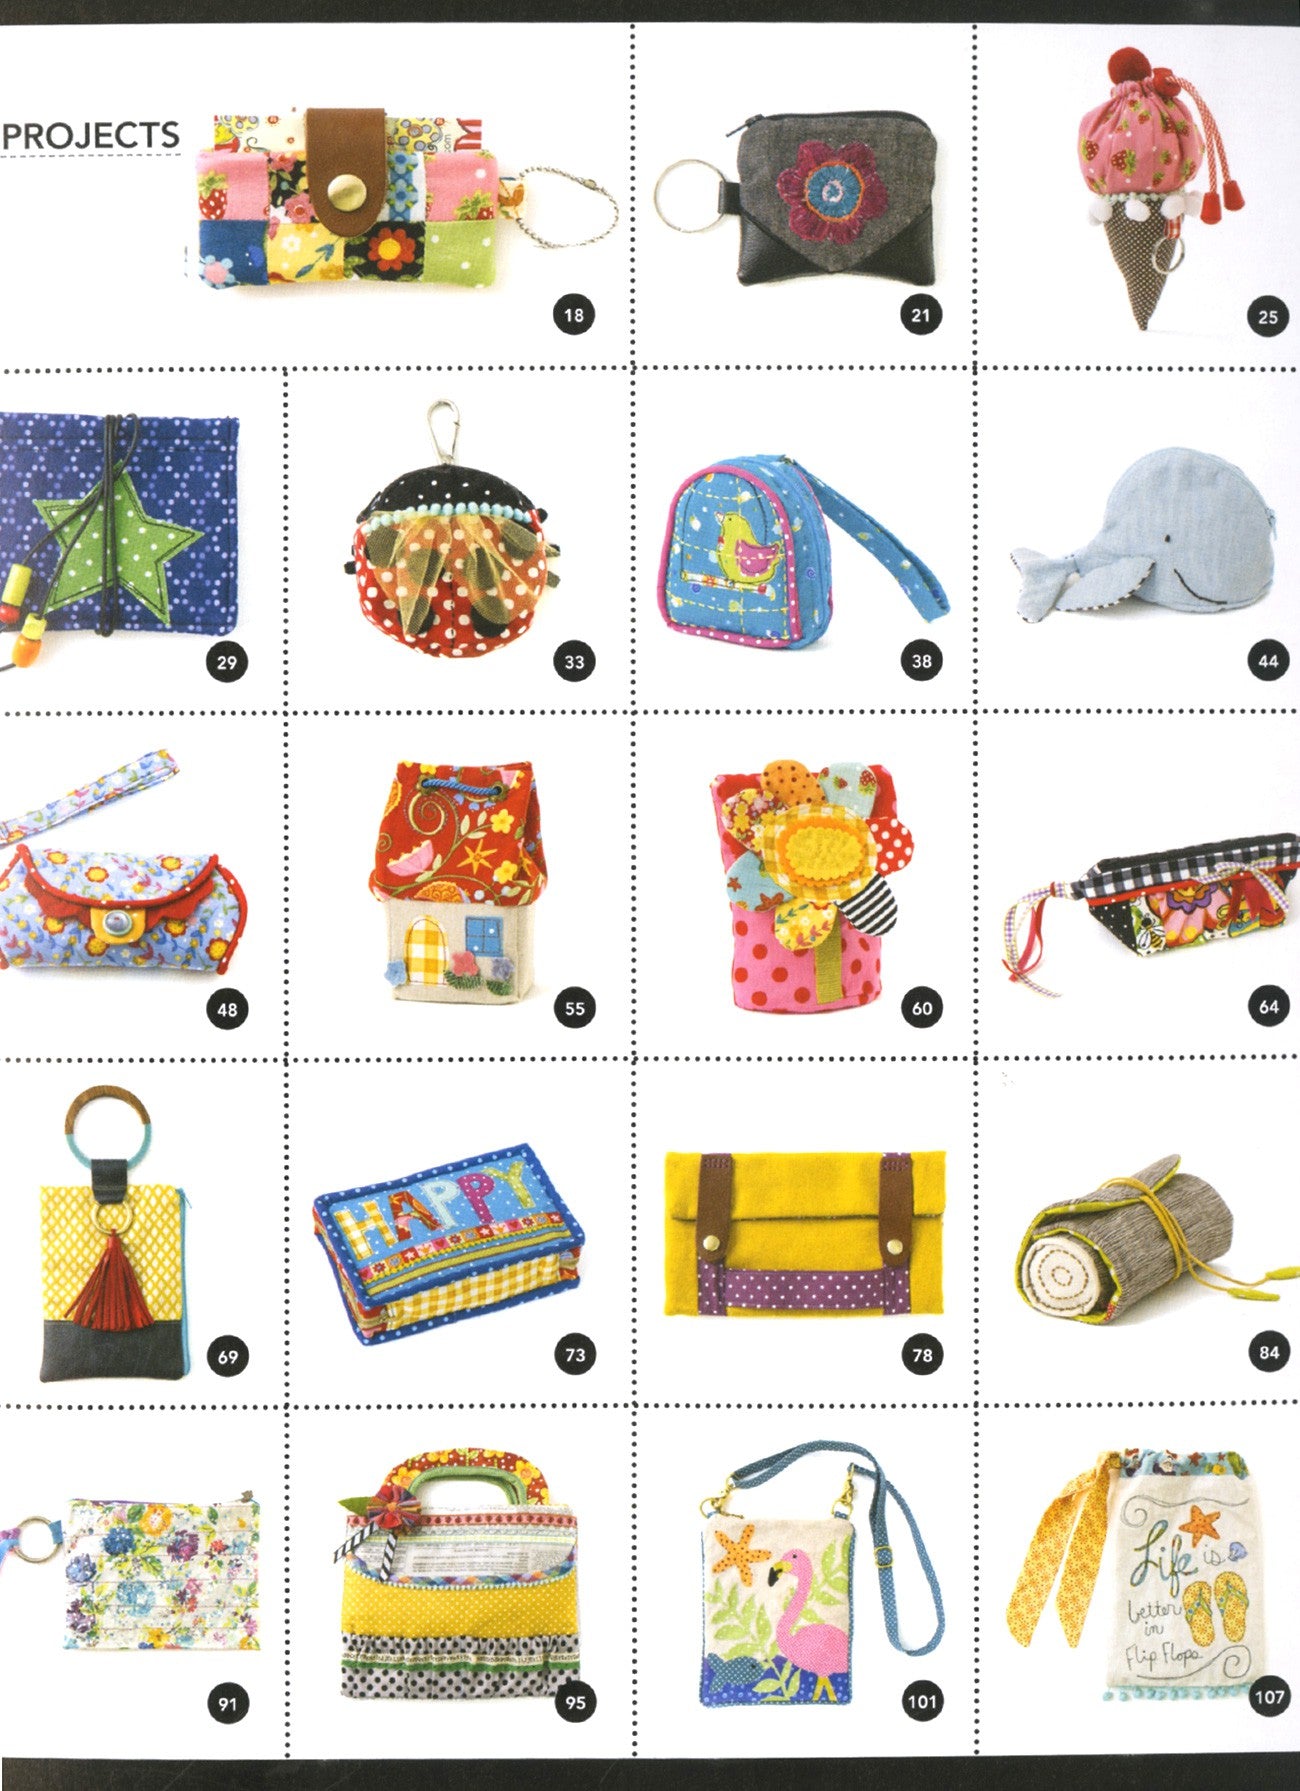 Sew Small 19 Little Bags Sewing Pattern Book by Jennifer Heynen for Stash Books